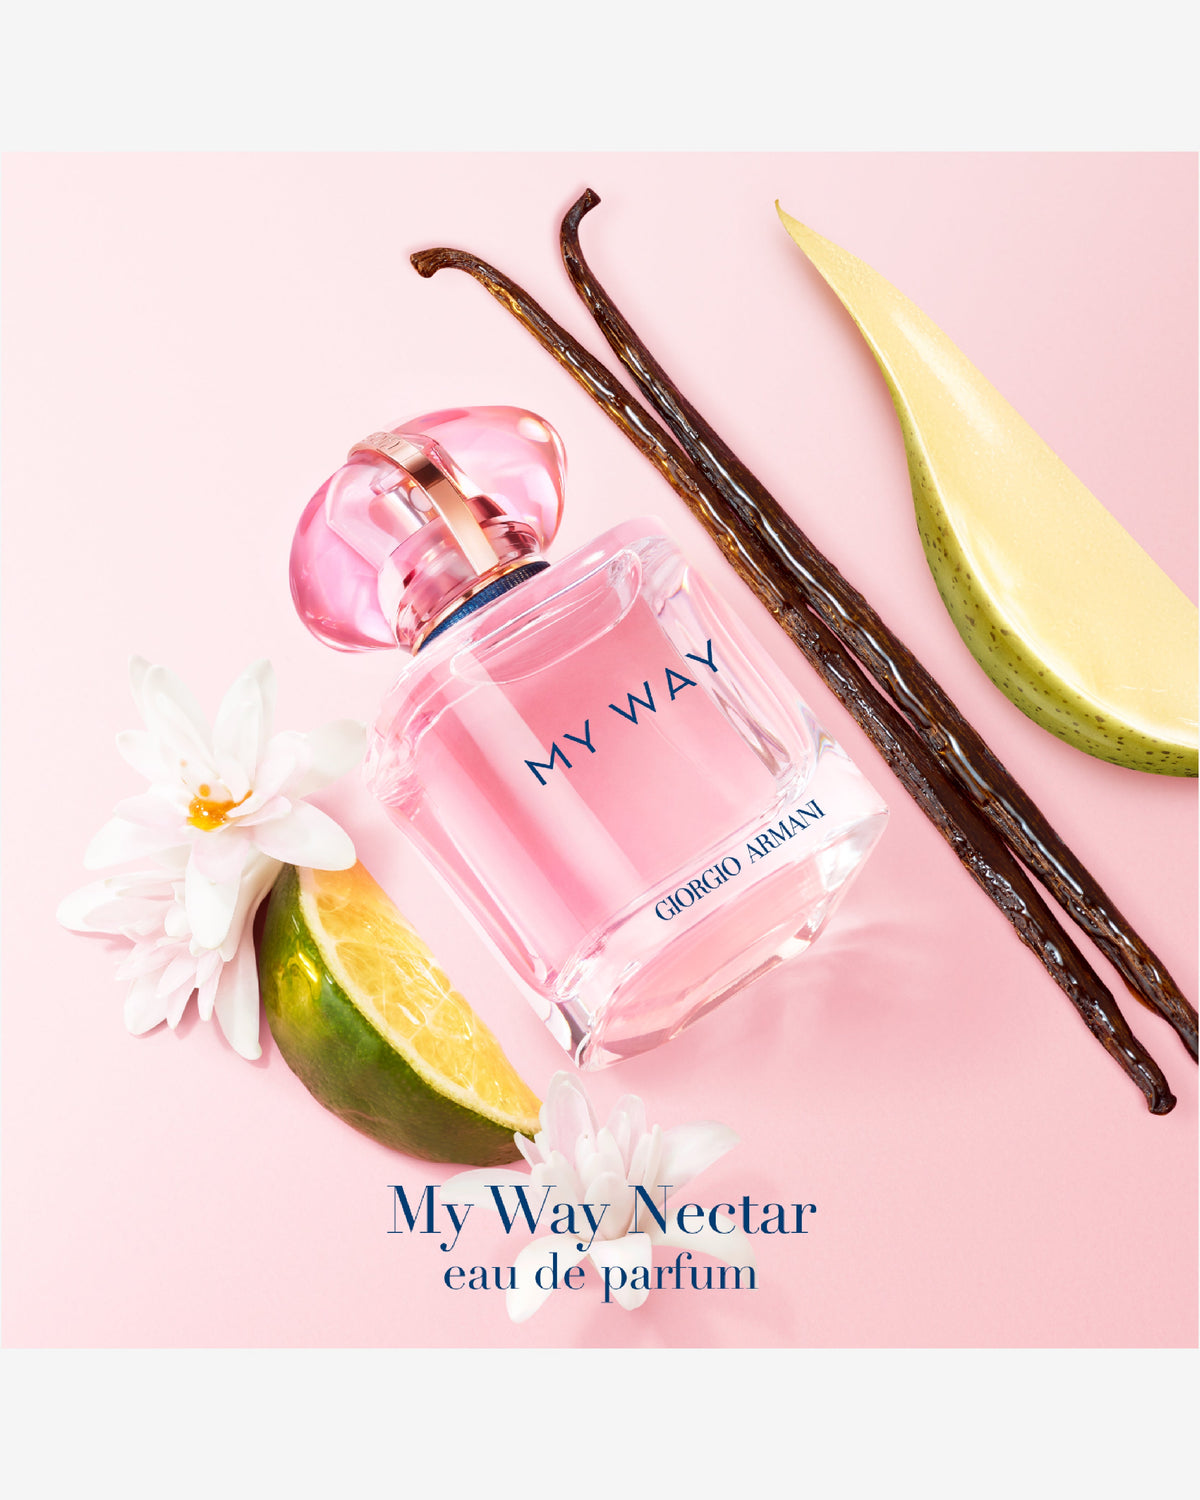 My Way Eau De Parfum Nectar